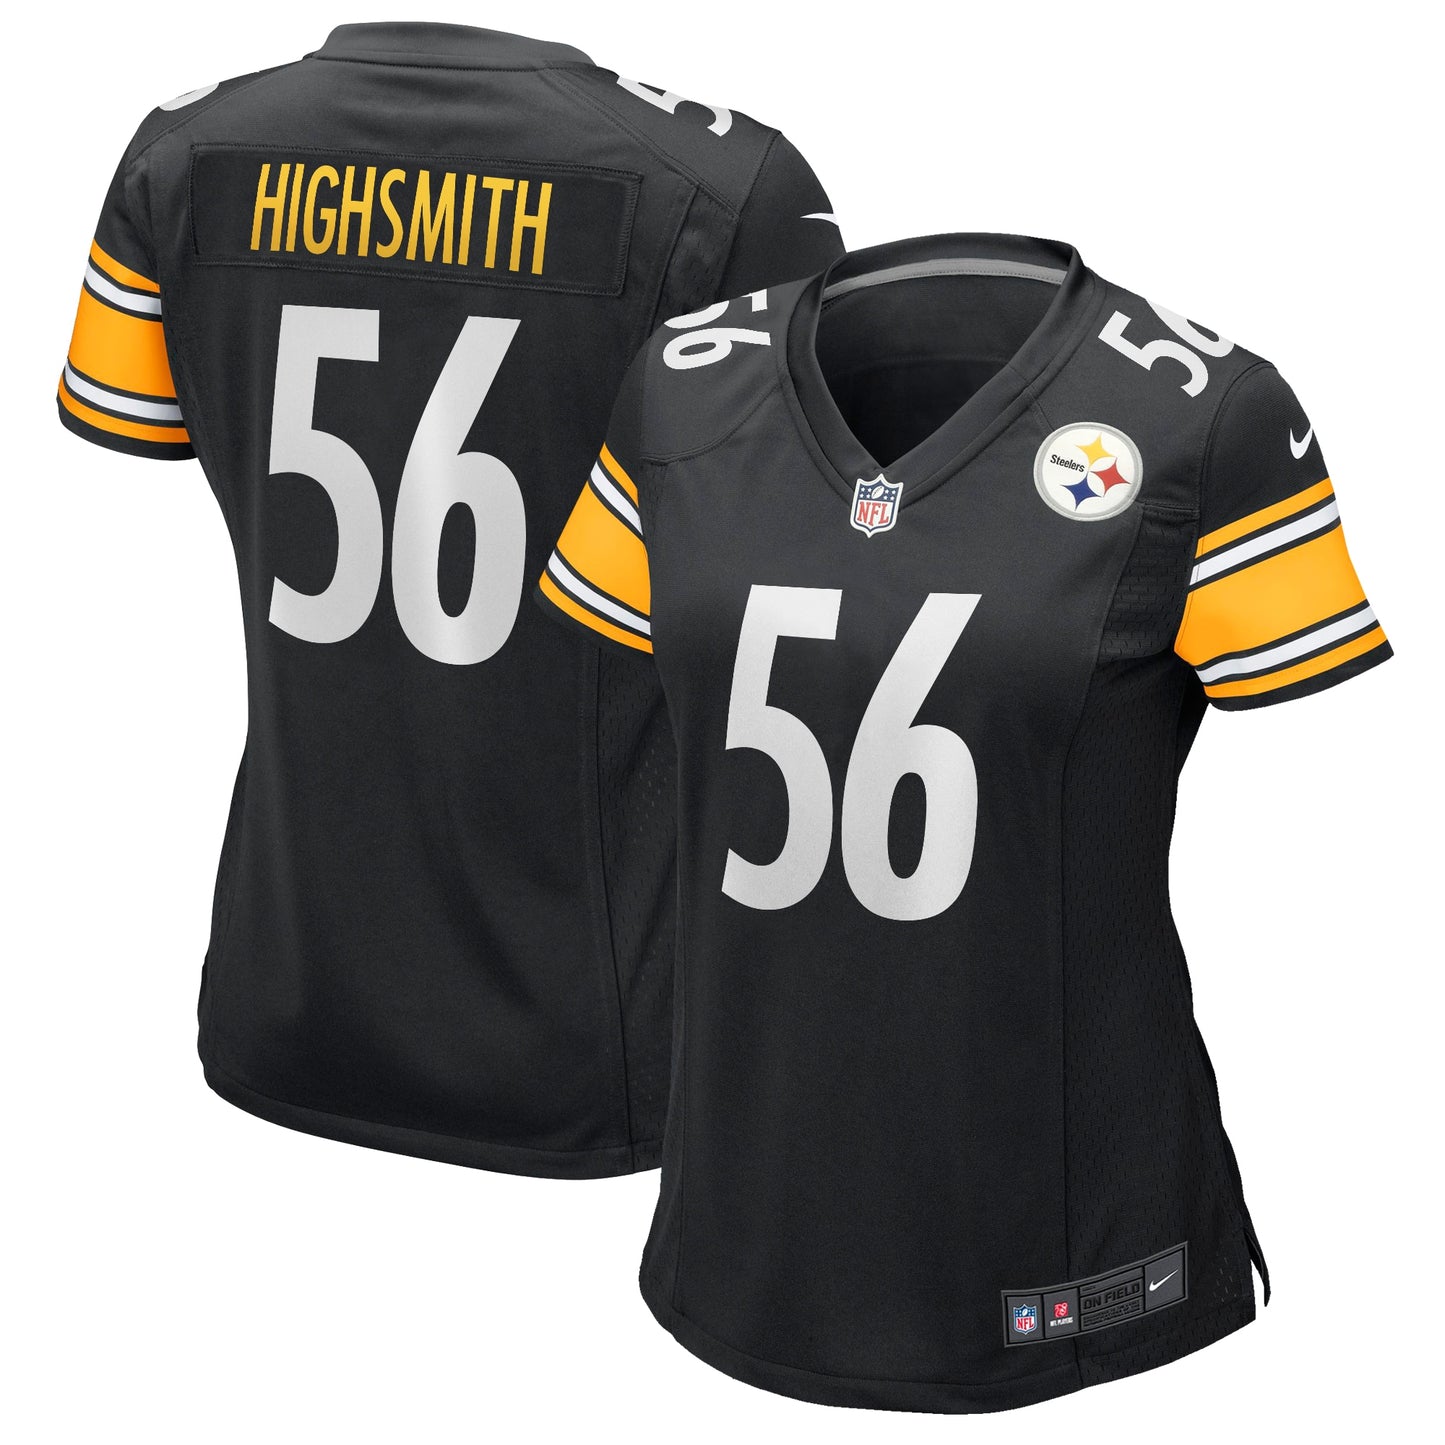 Alex Highsmith Pittsburgh Steelers Nike Women's Game Jersey - Black